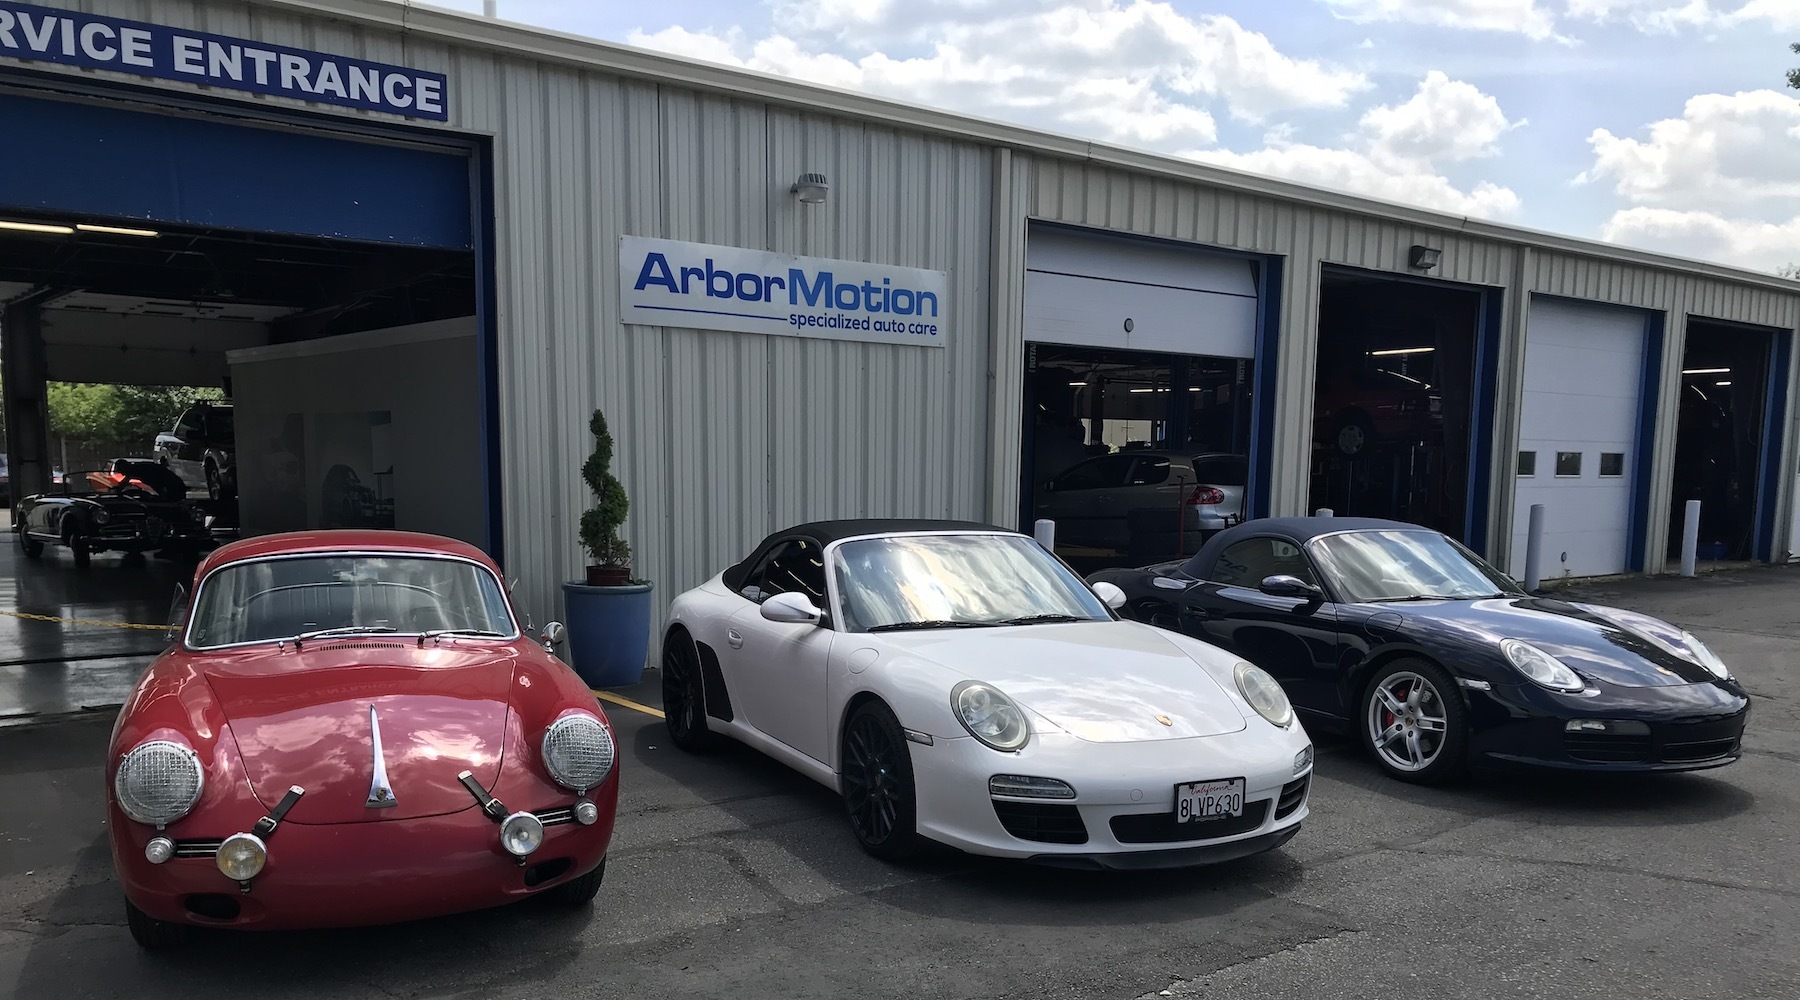 Get your Porsche inspected at ArborMotion!